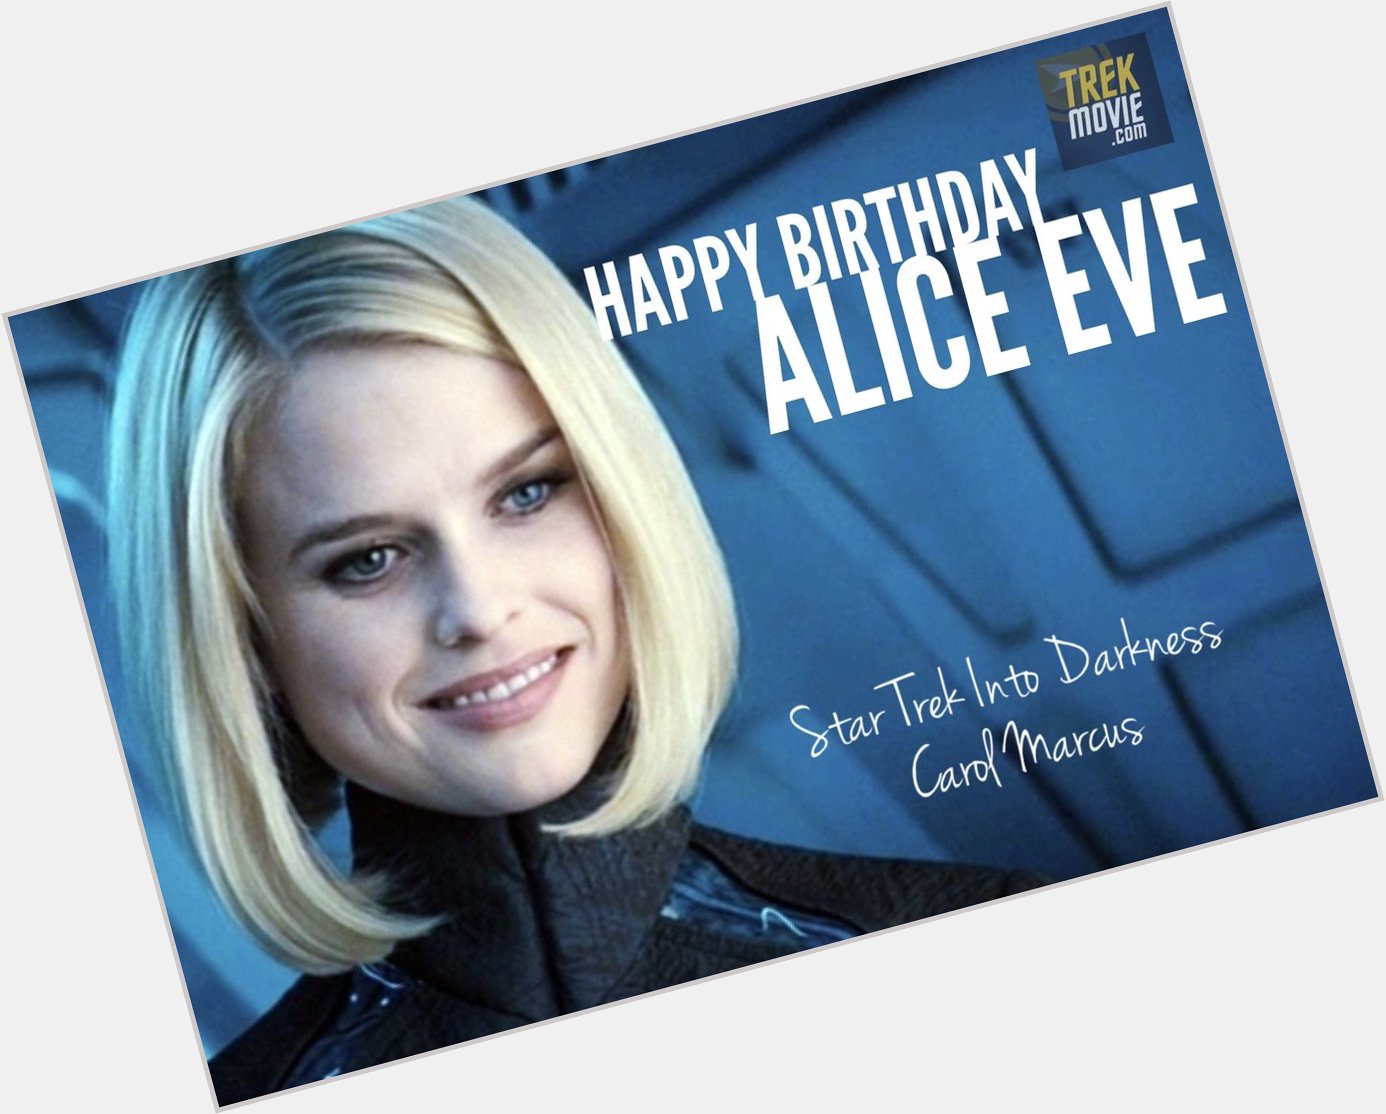 Wishing Alice Eve a happy birthday today!  